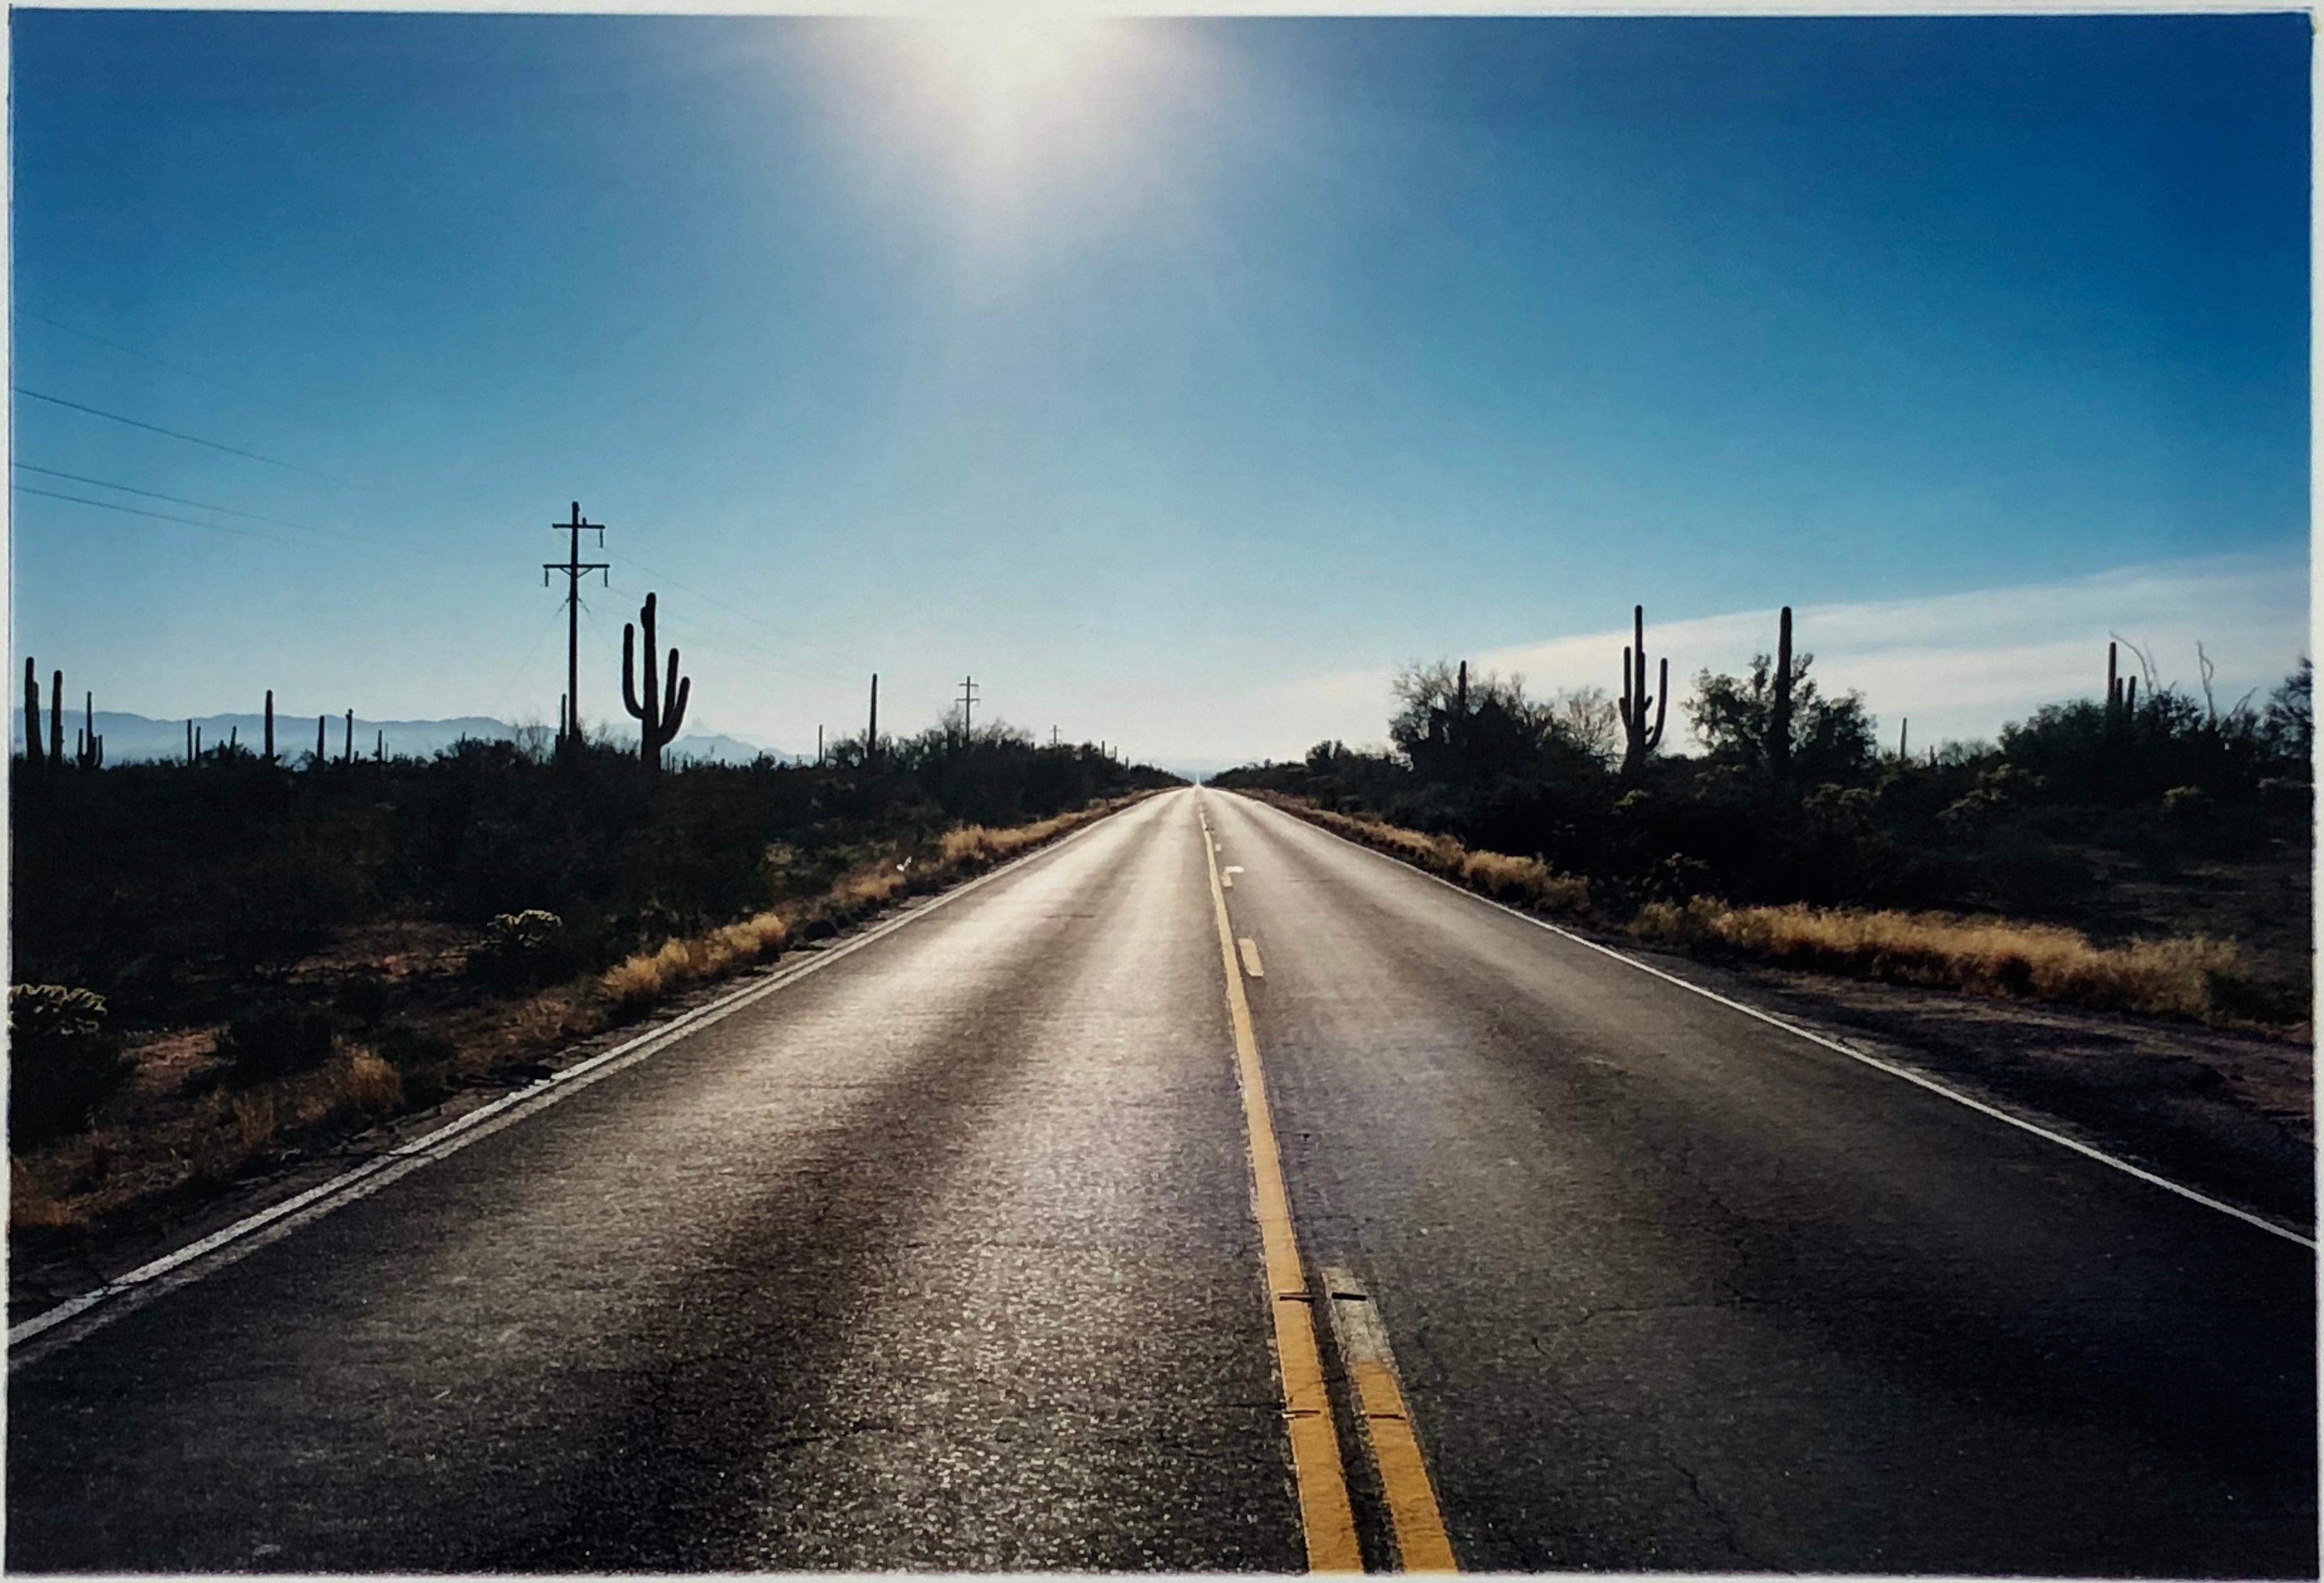 Richard Heeps Landscape Photograph - Road to Gunsight, Highway 86, Arizona - American landscape color photography